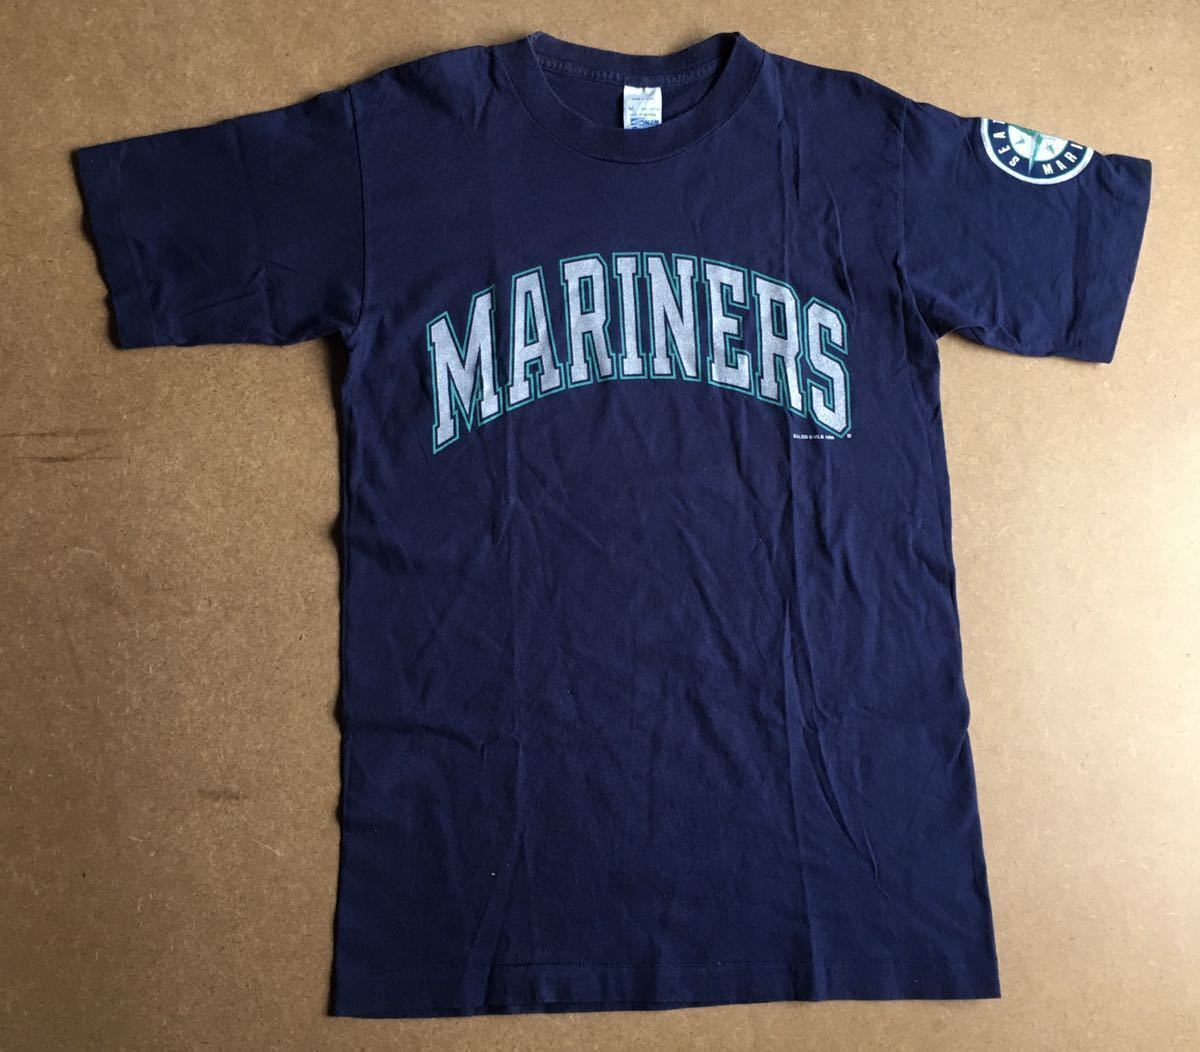 USA製 1996年 Seattle Mariners ロゴ Tシャツ ネイビー MADE IN USA 90s ベースボール 野球 Tee 半袖 Tシャツ メジャーリーグ_画像1